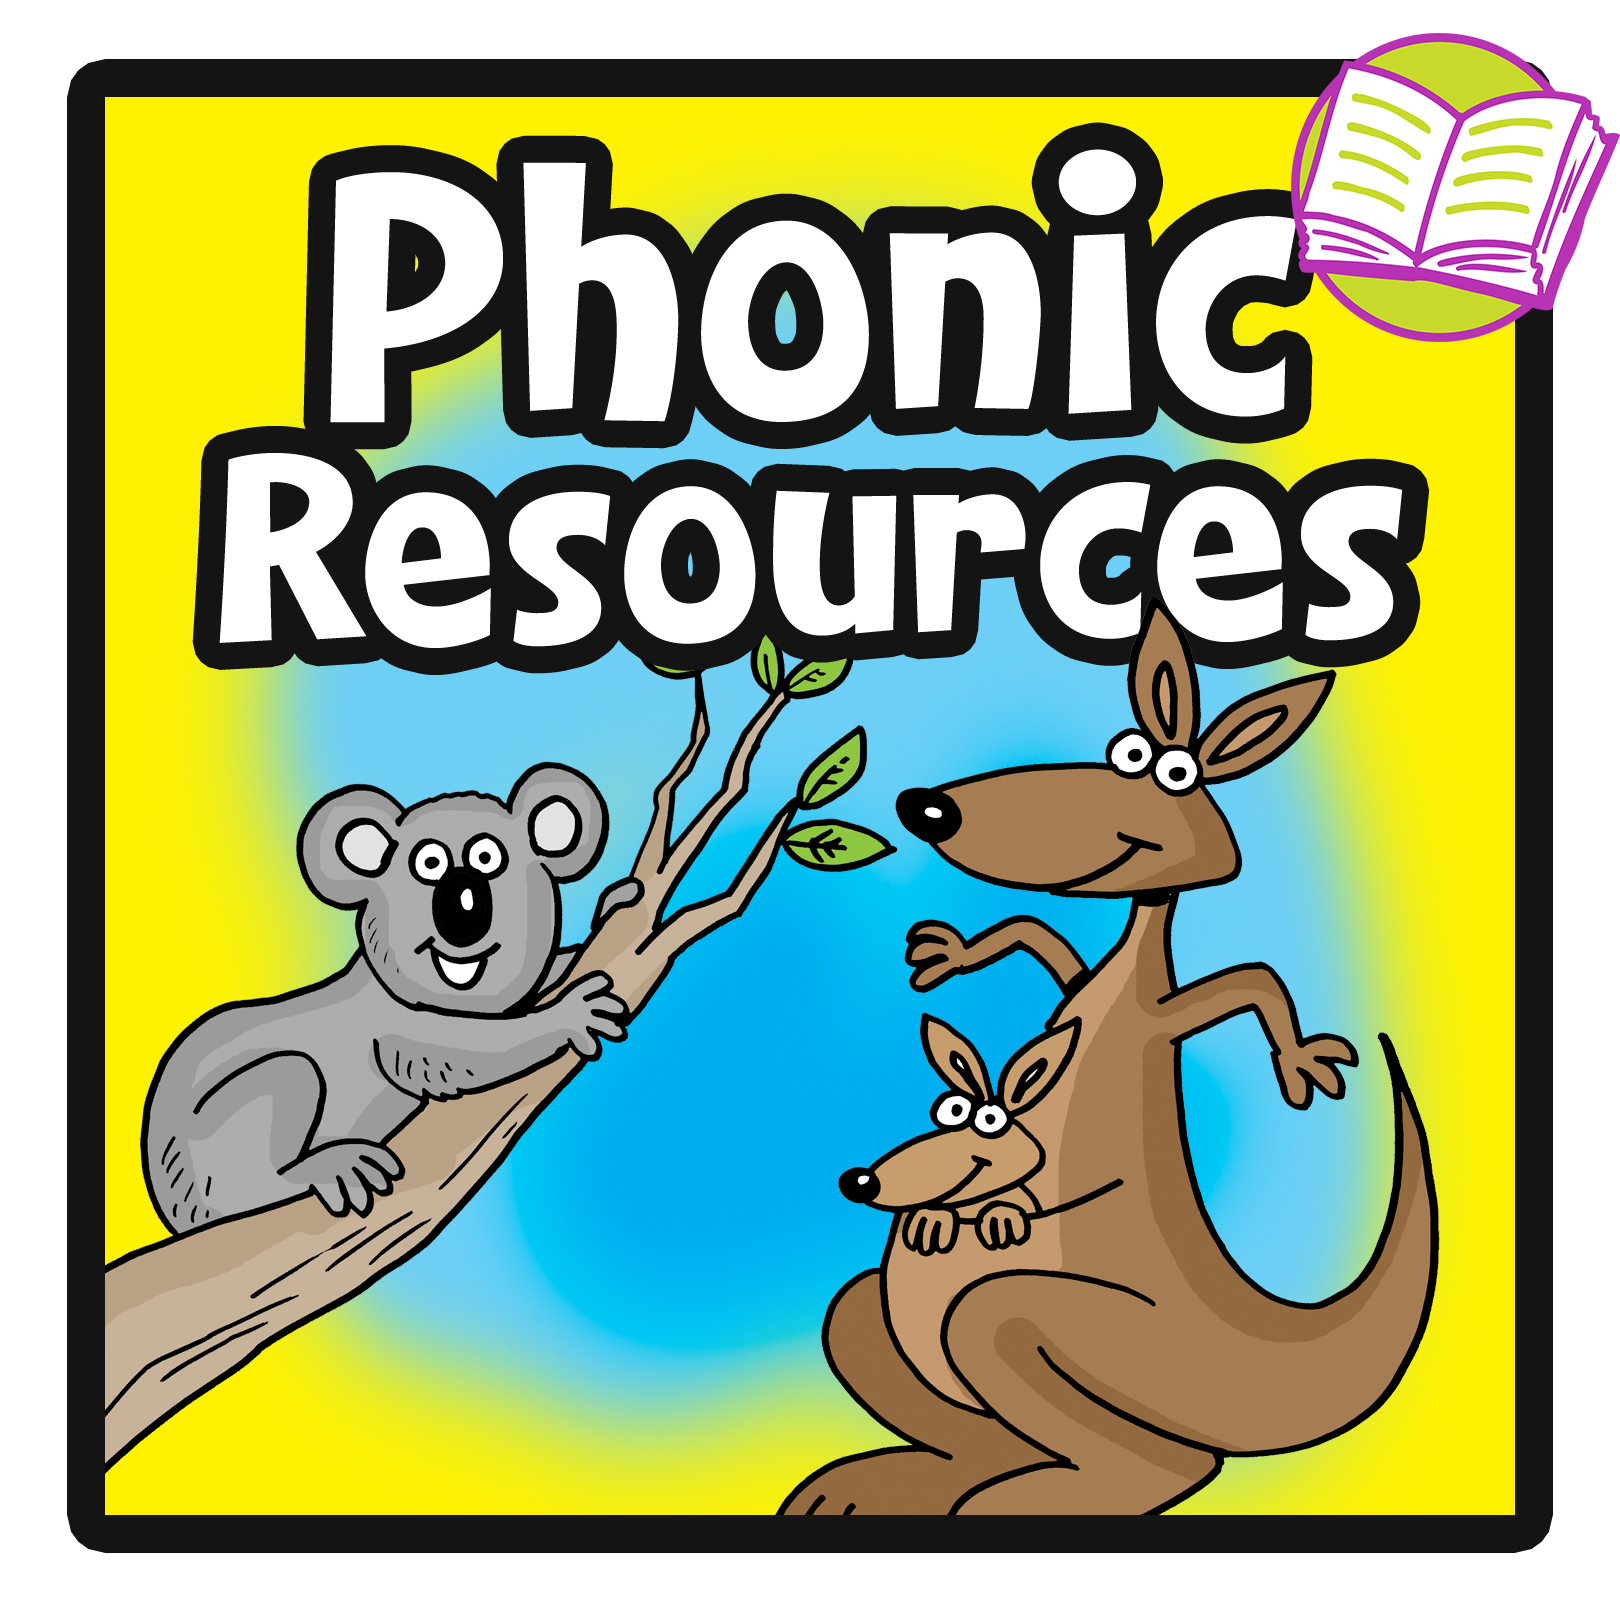 Phonics Resources - K-3 Teacher Resources K-3 Teacher Resources